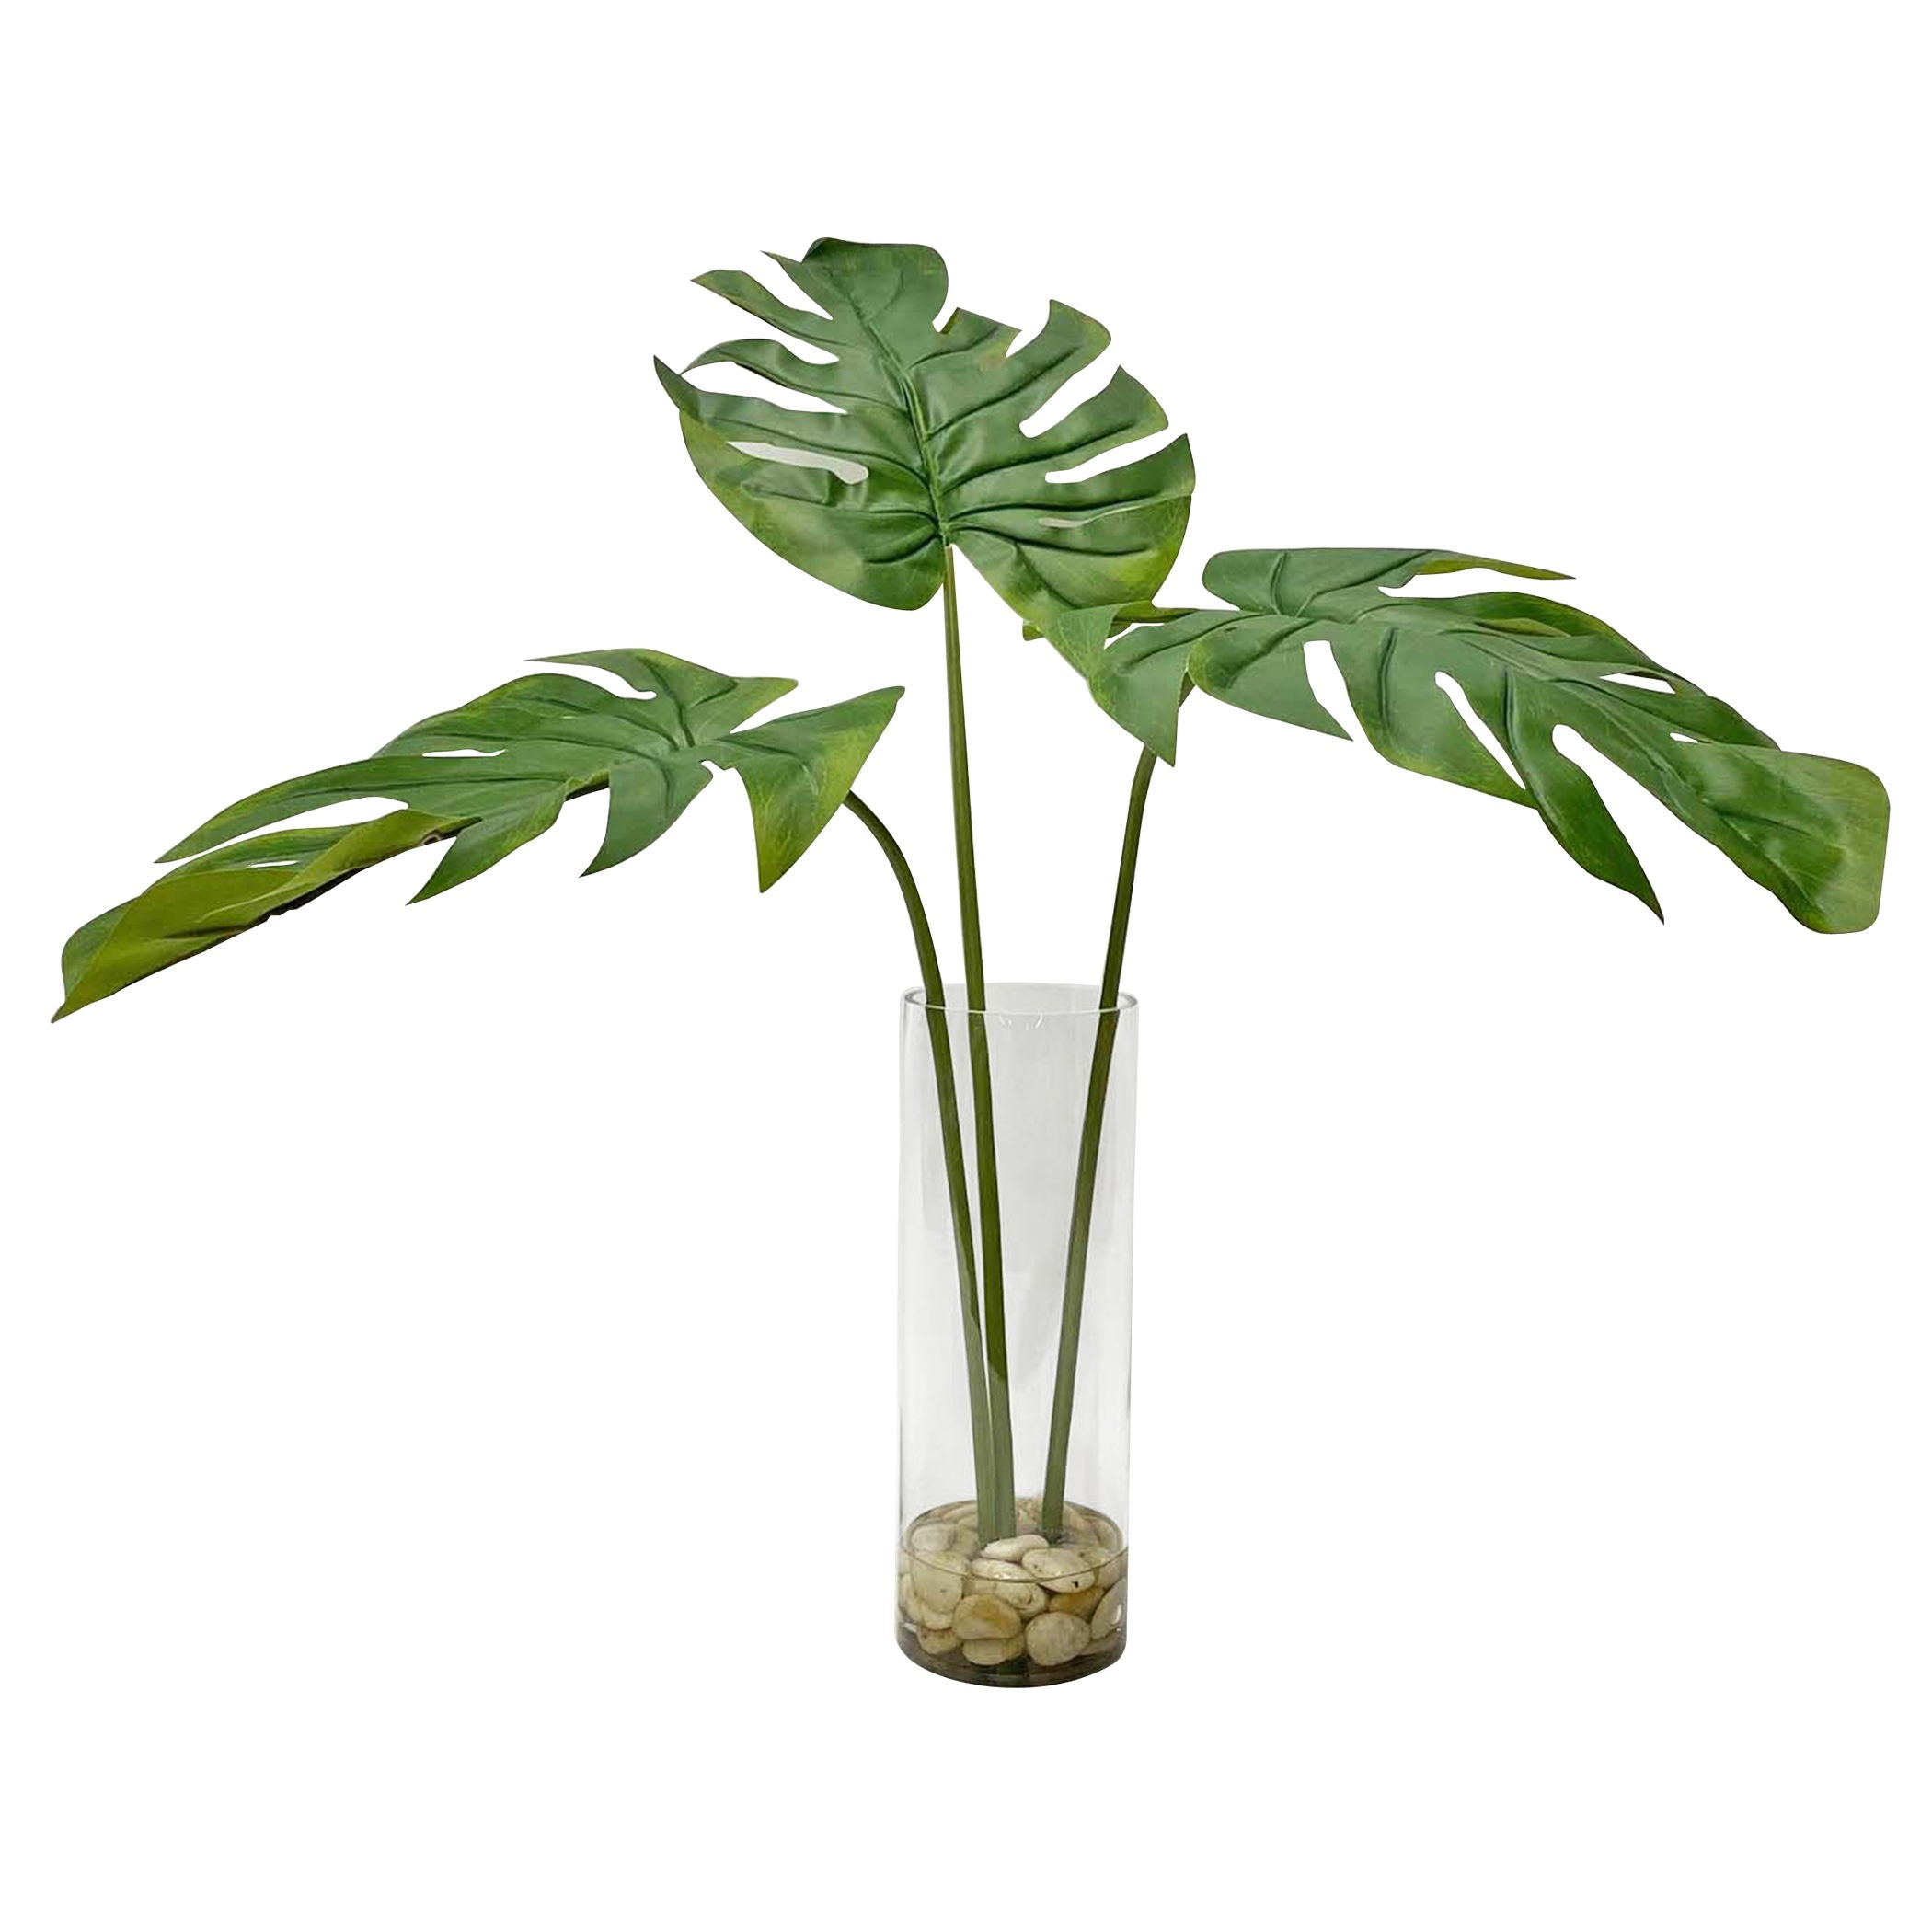 Ibero - Split Leaf Palm - Green